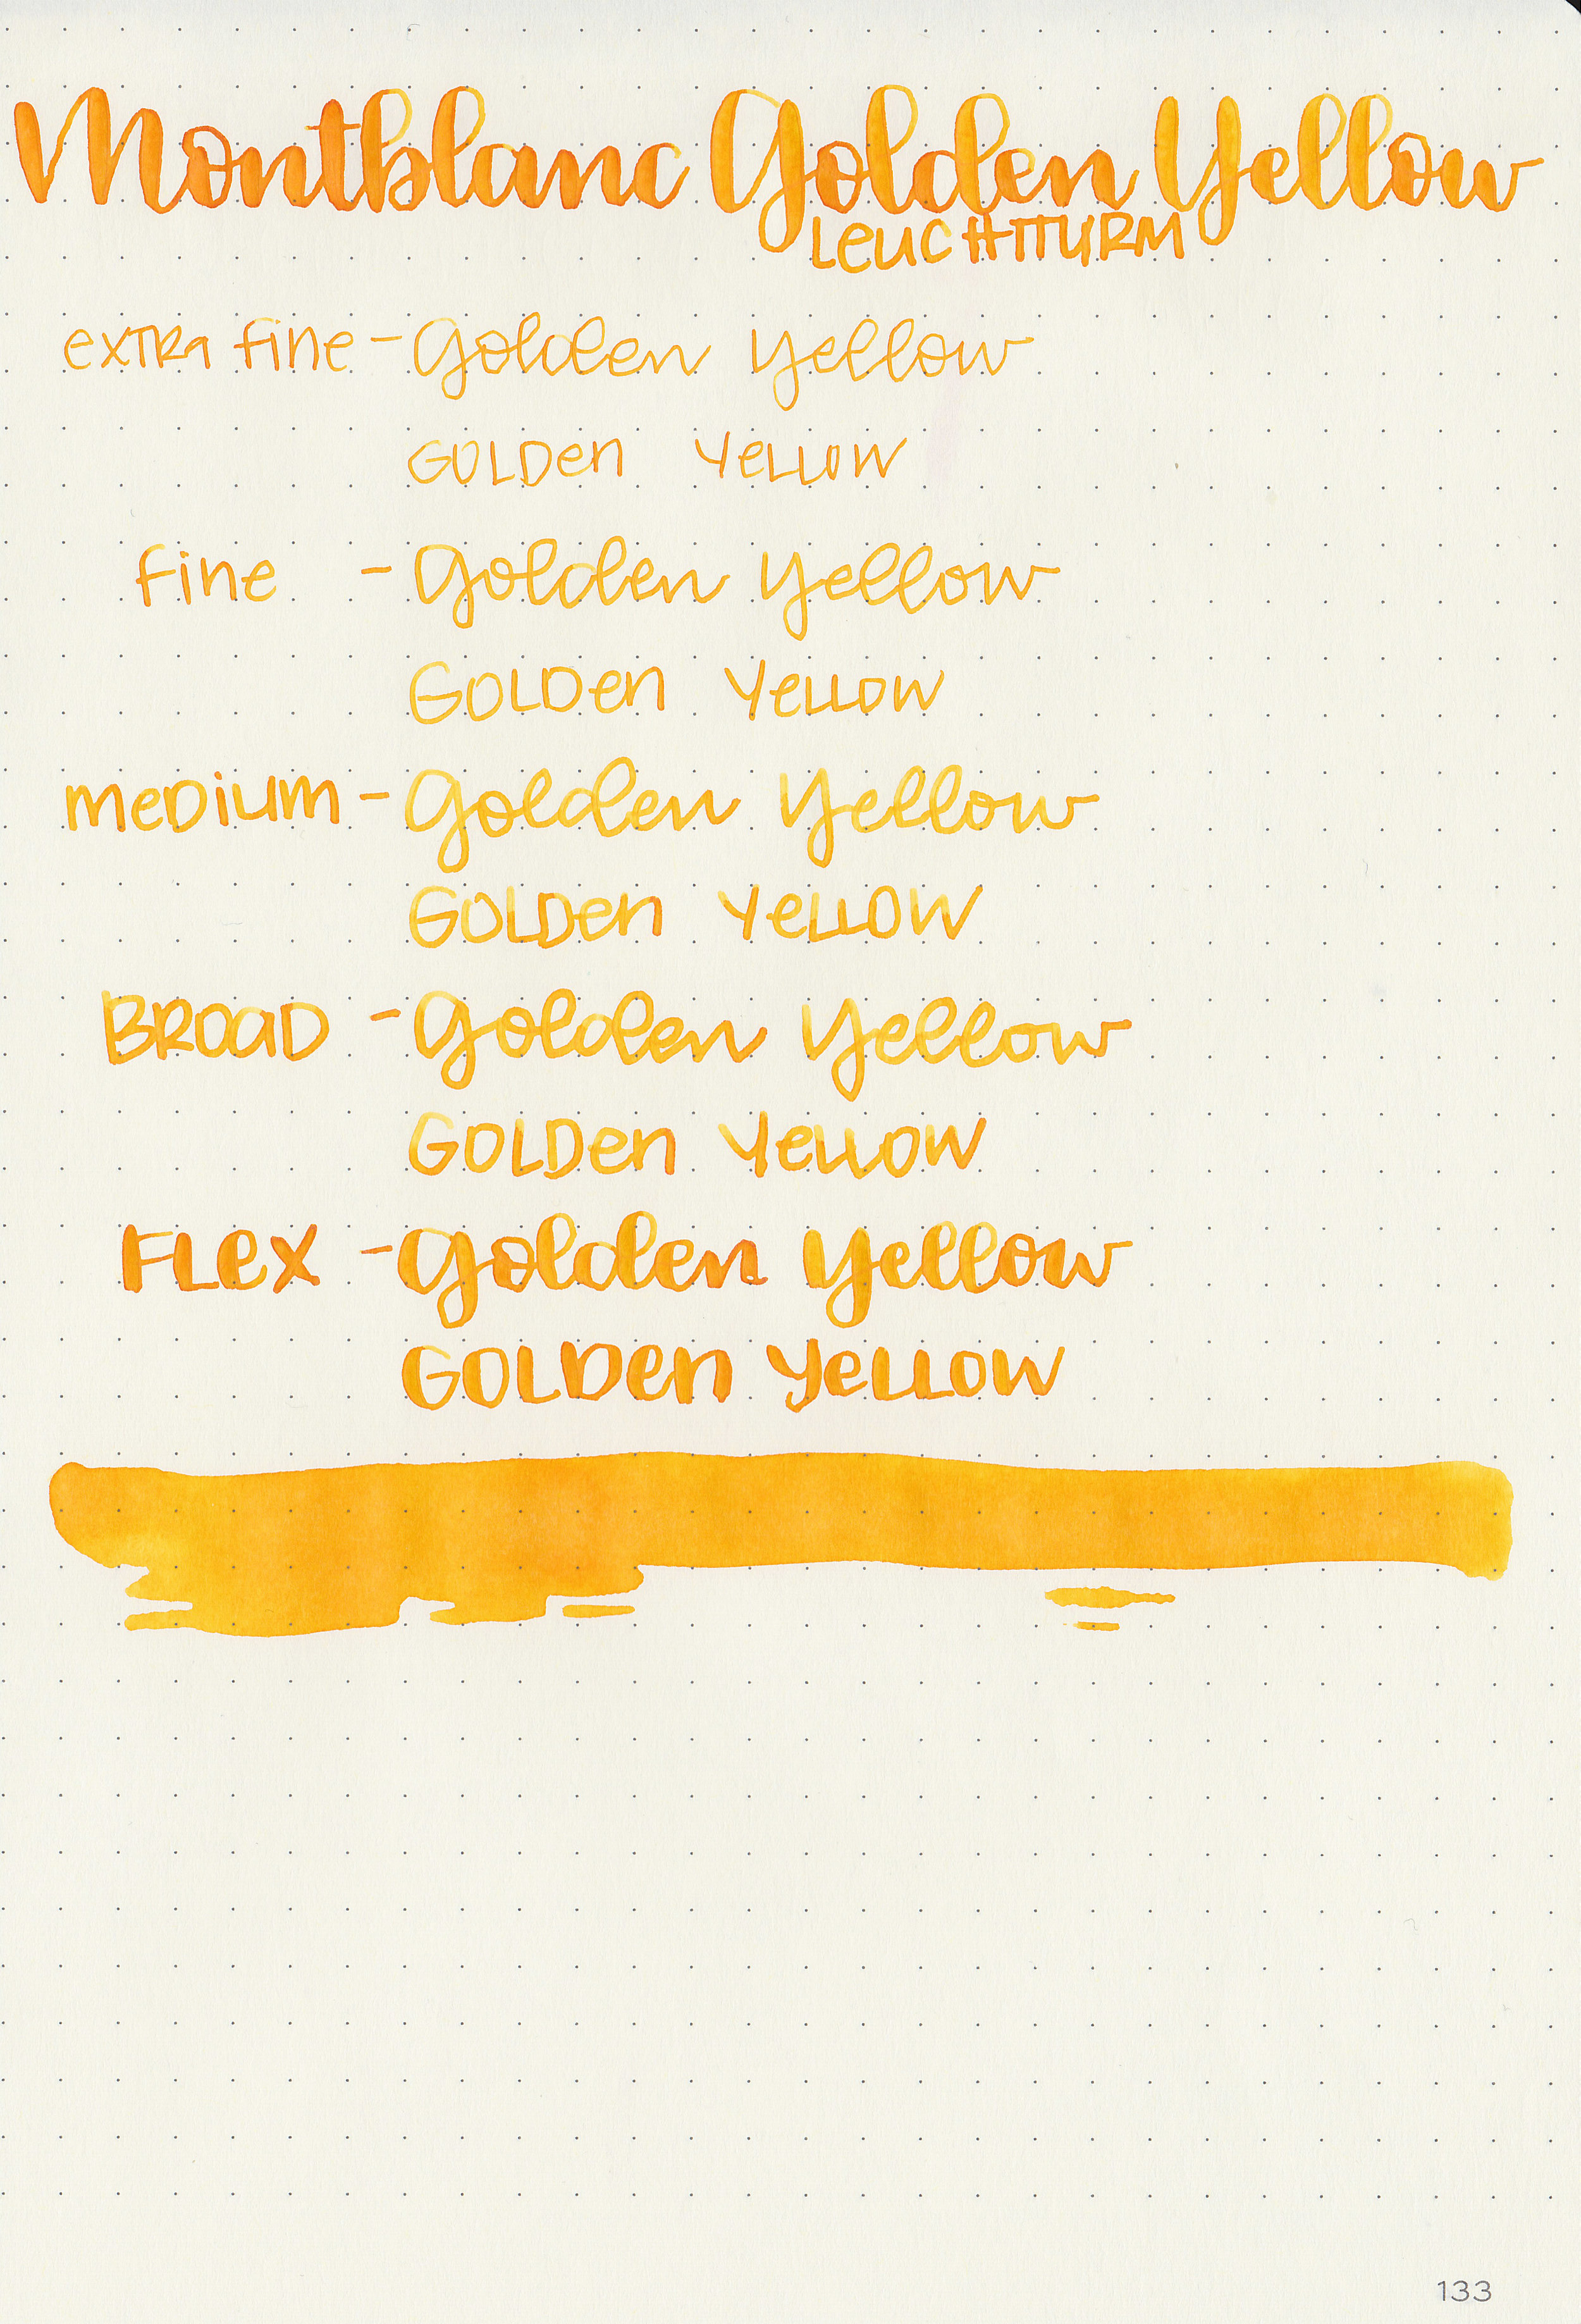 mb-golden-yellow-13.jpg